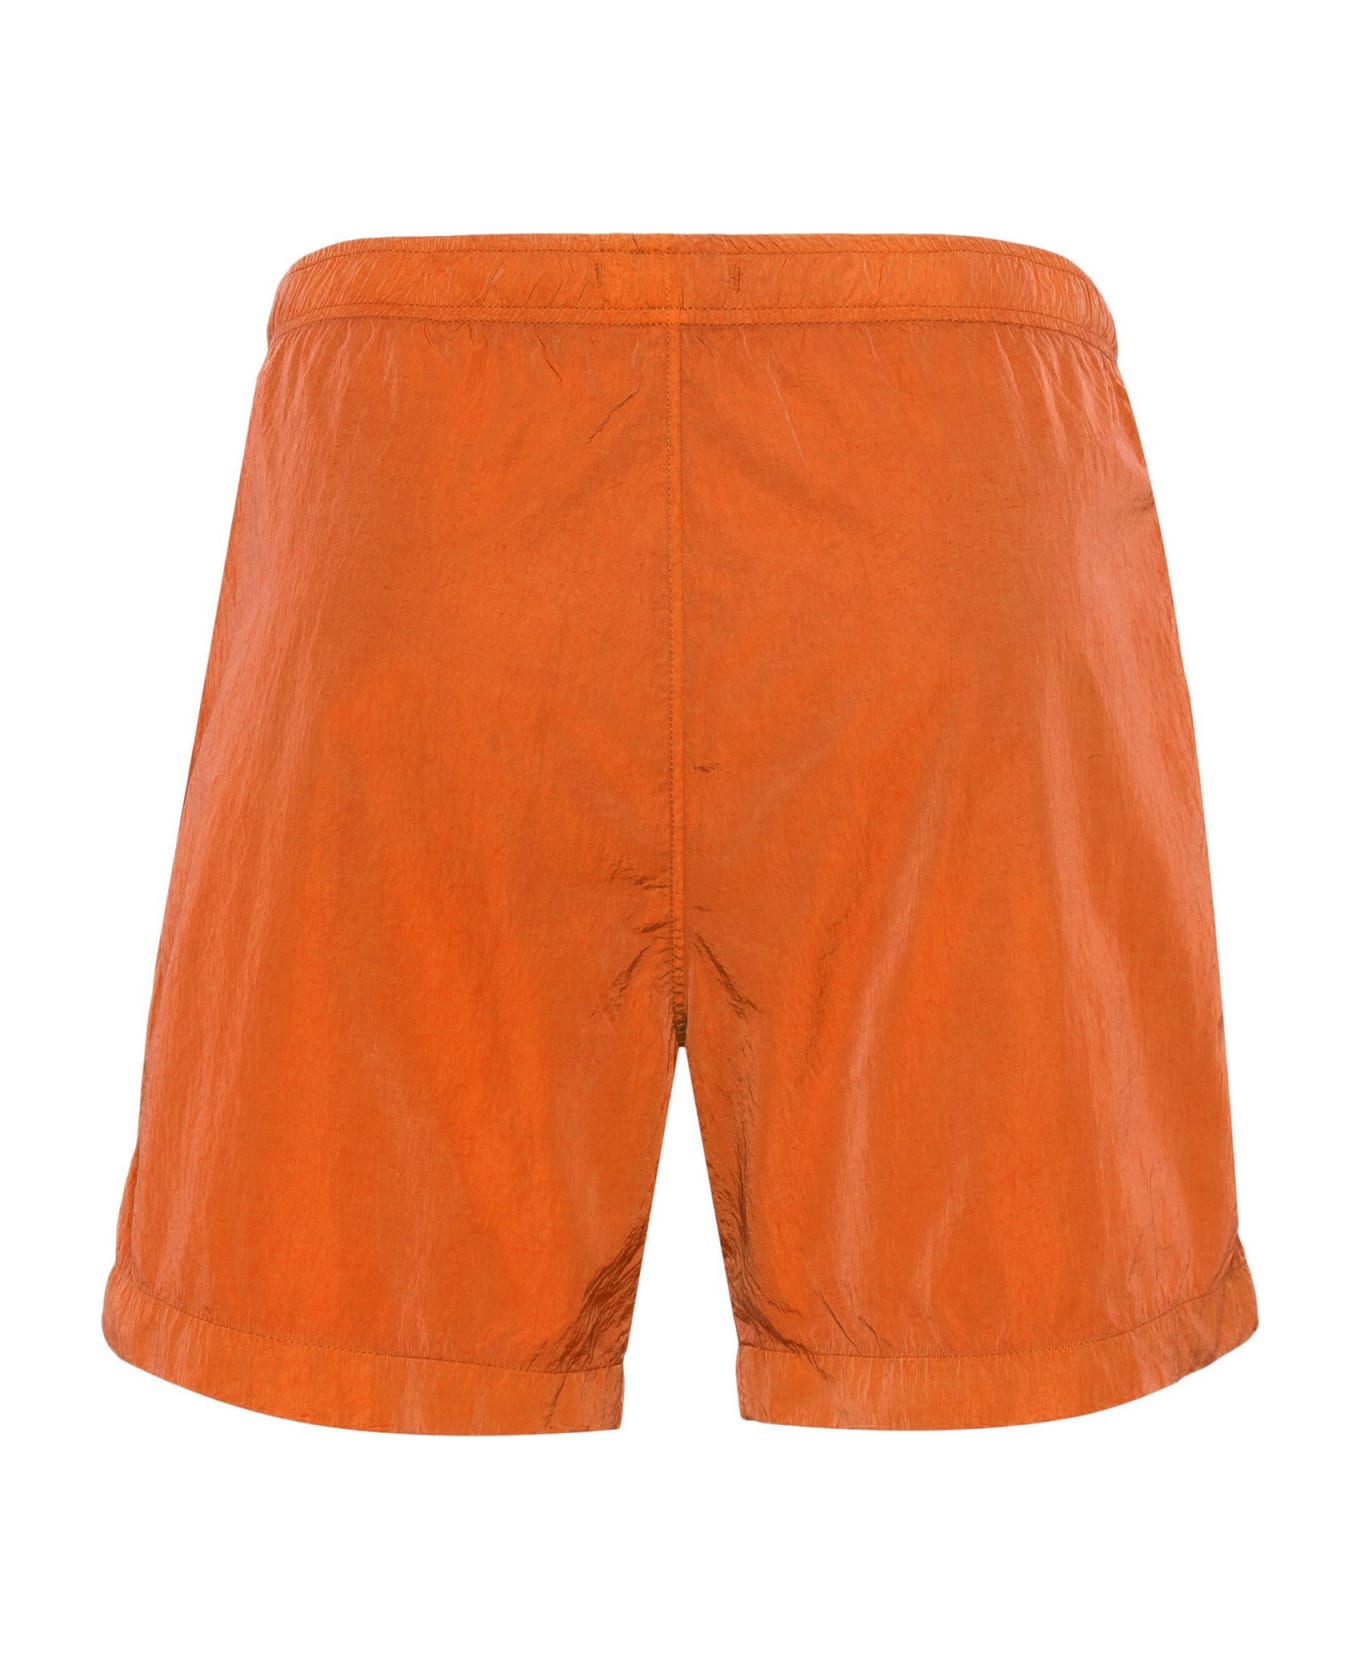 C.P. Company C.p.company Sea Clothing Orange - Orange スイムトランクス